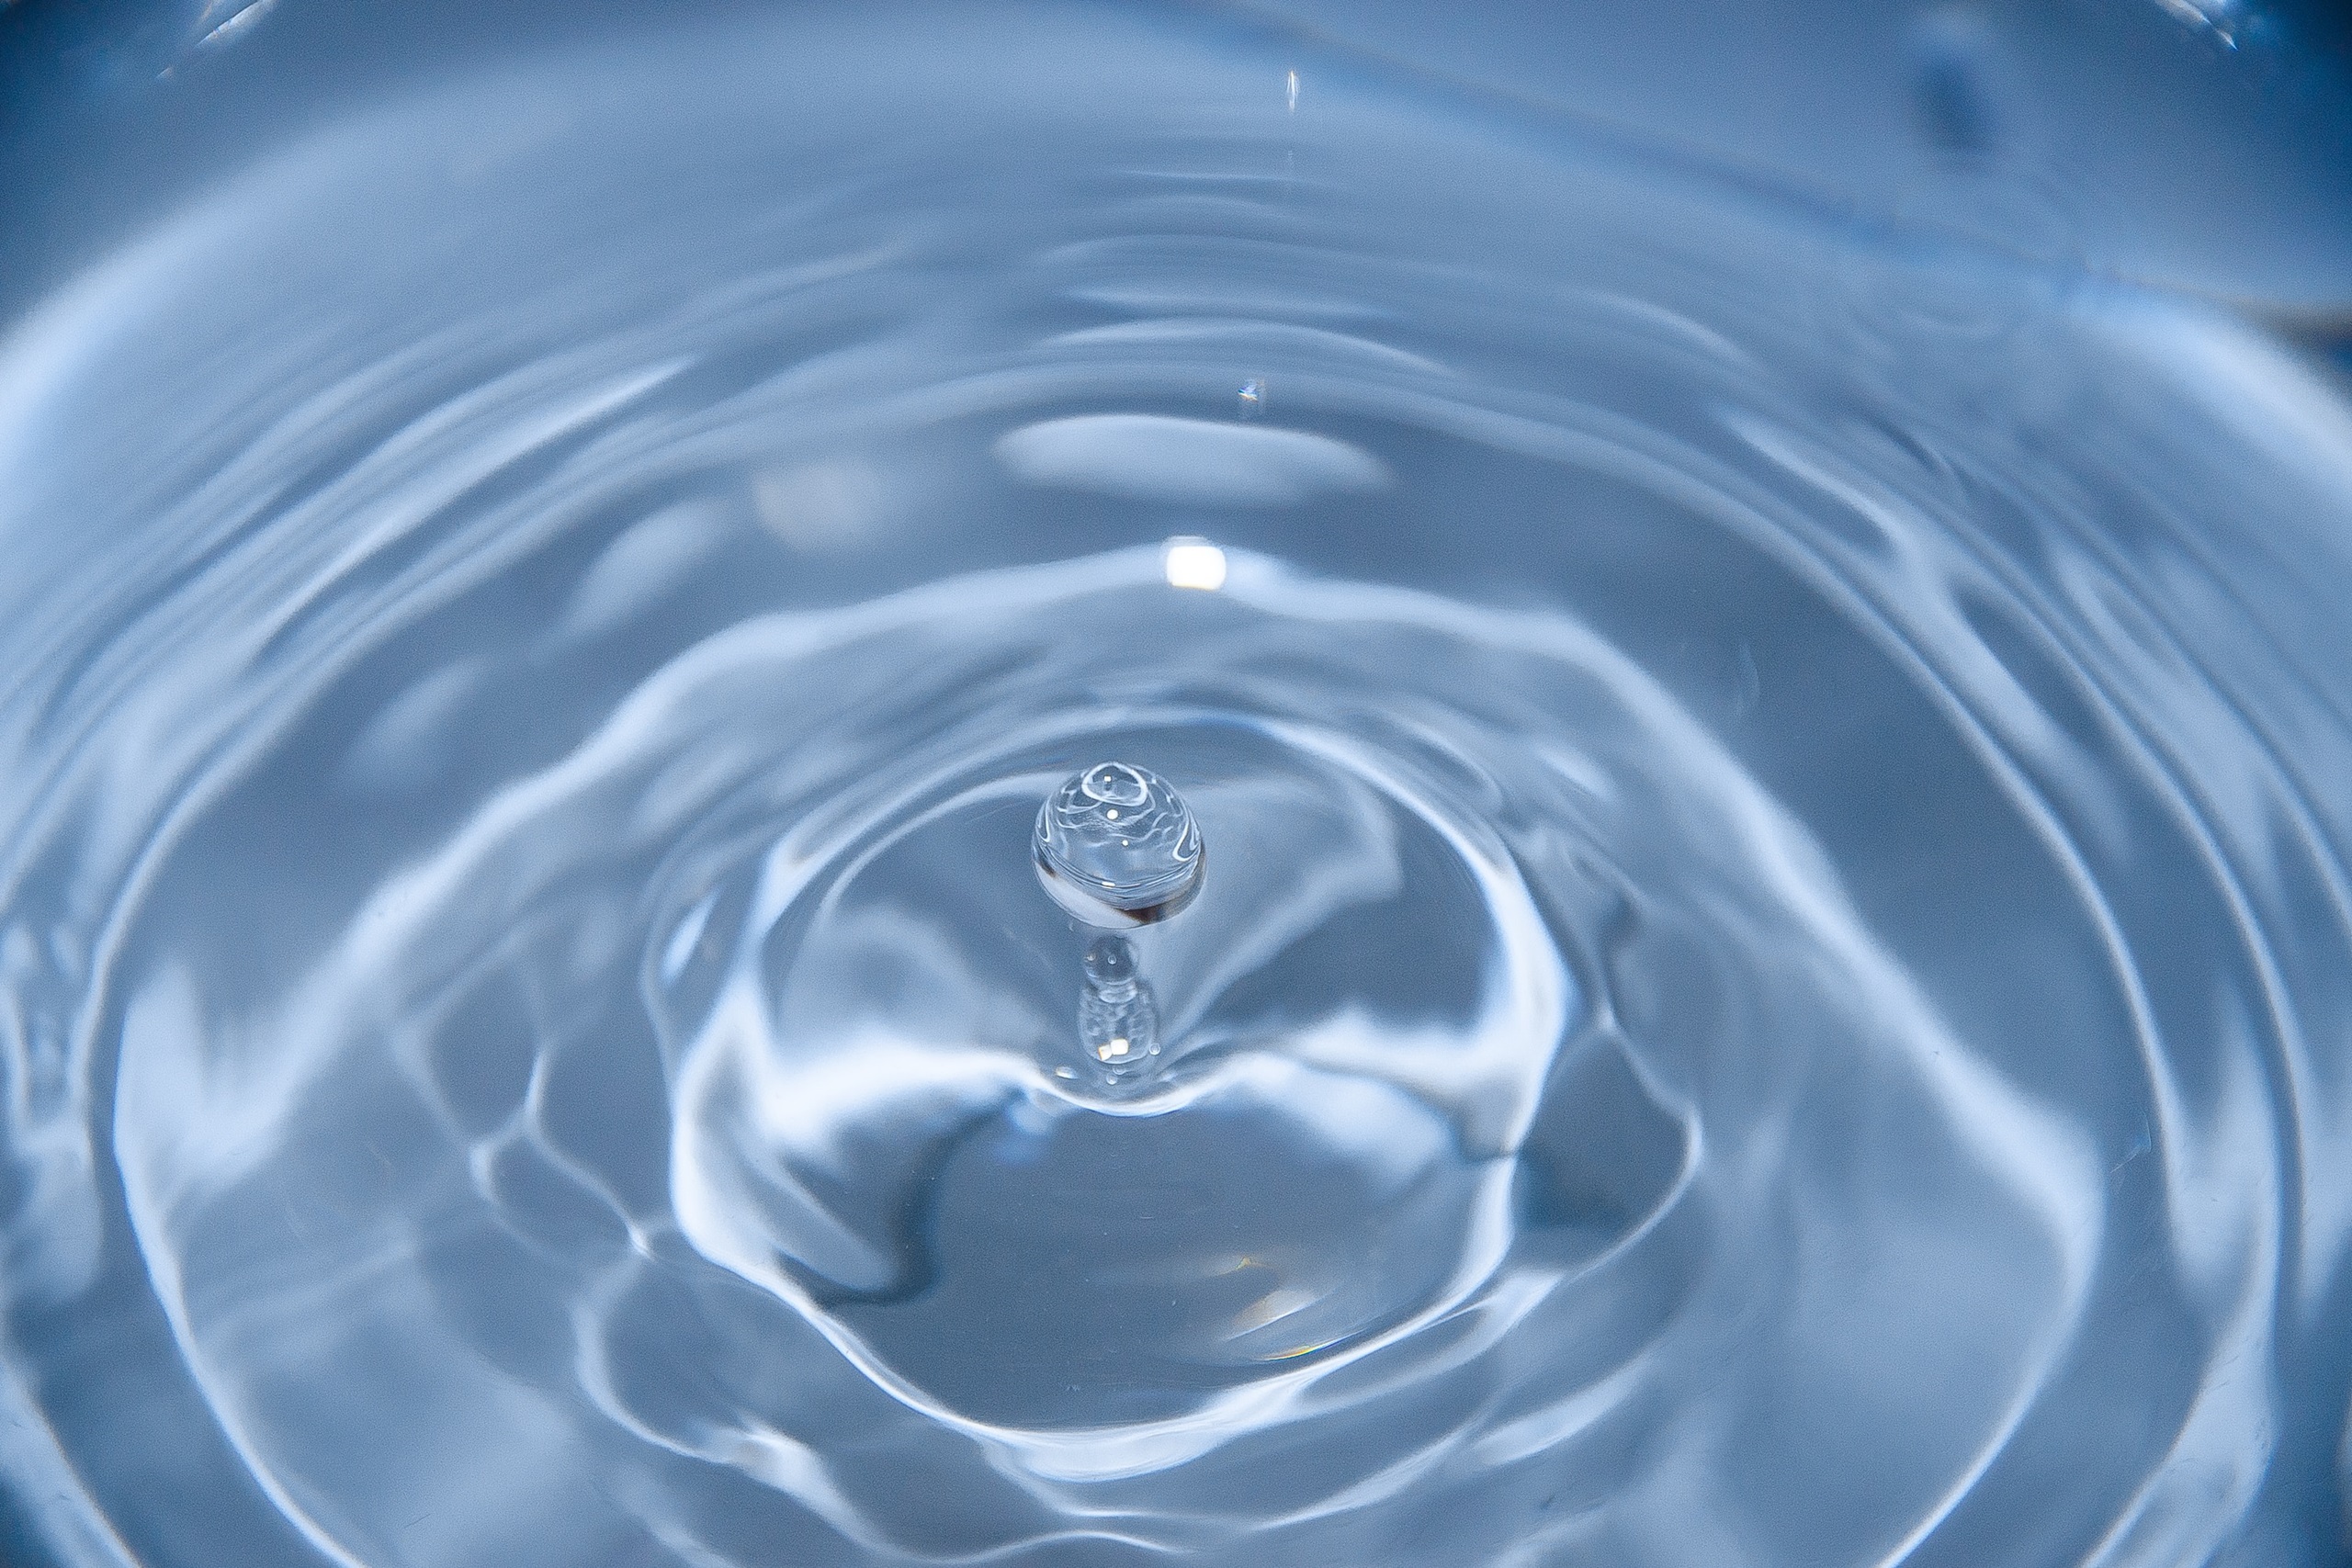 Water ripple